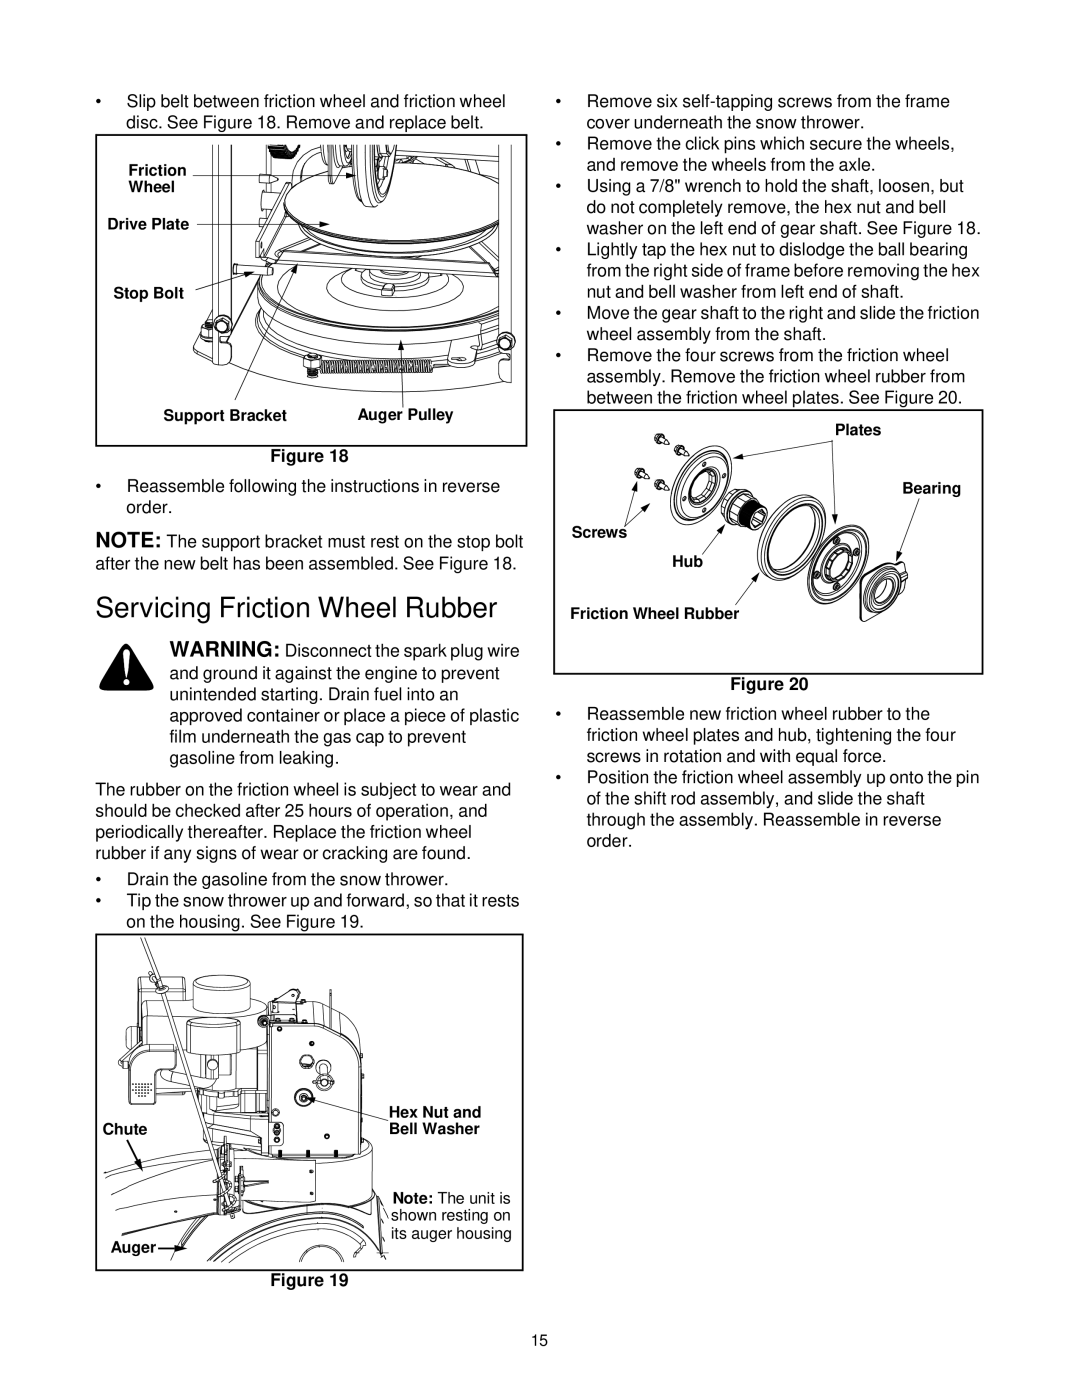 Yard-Man E643E, E663H manual Servicing Friction Wheel Rubber 